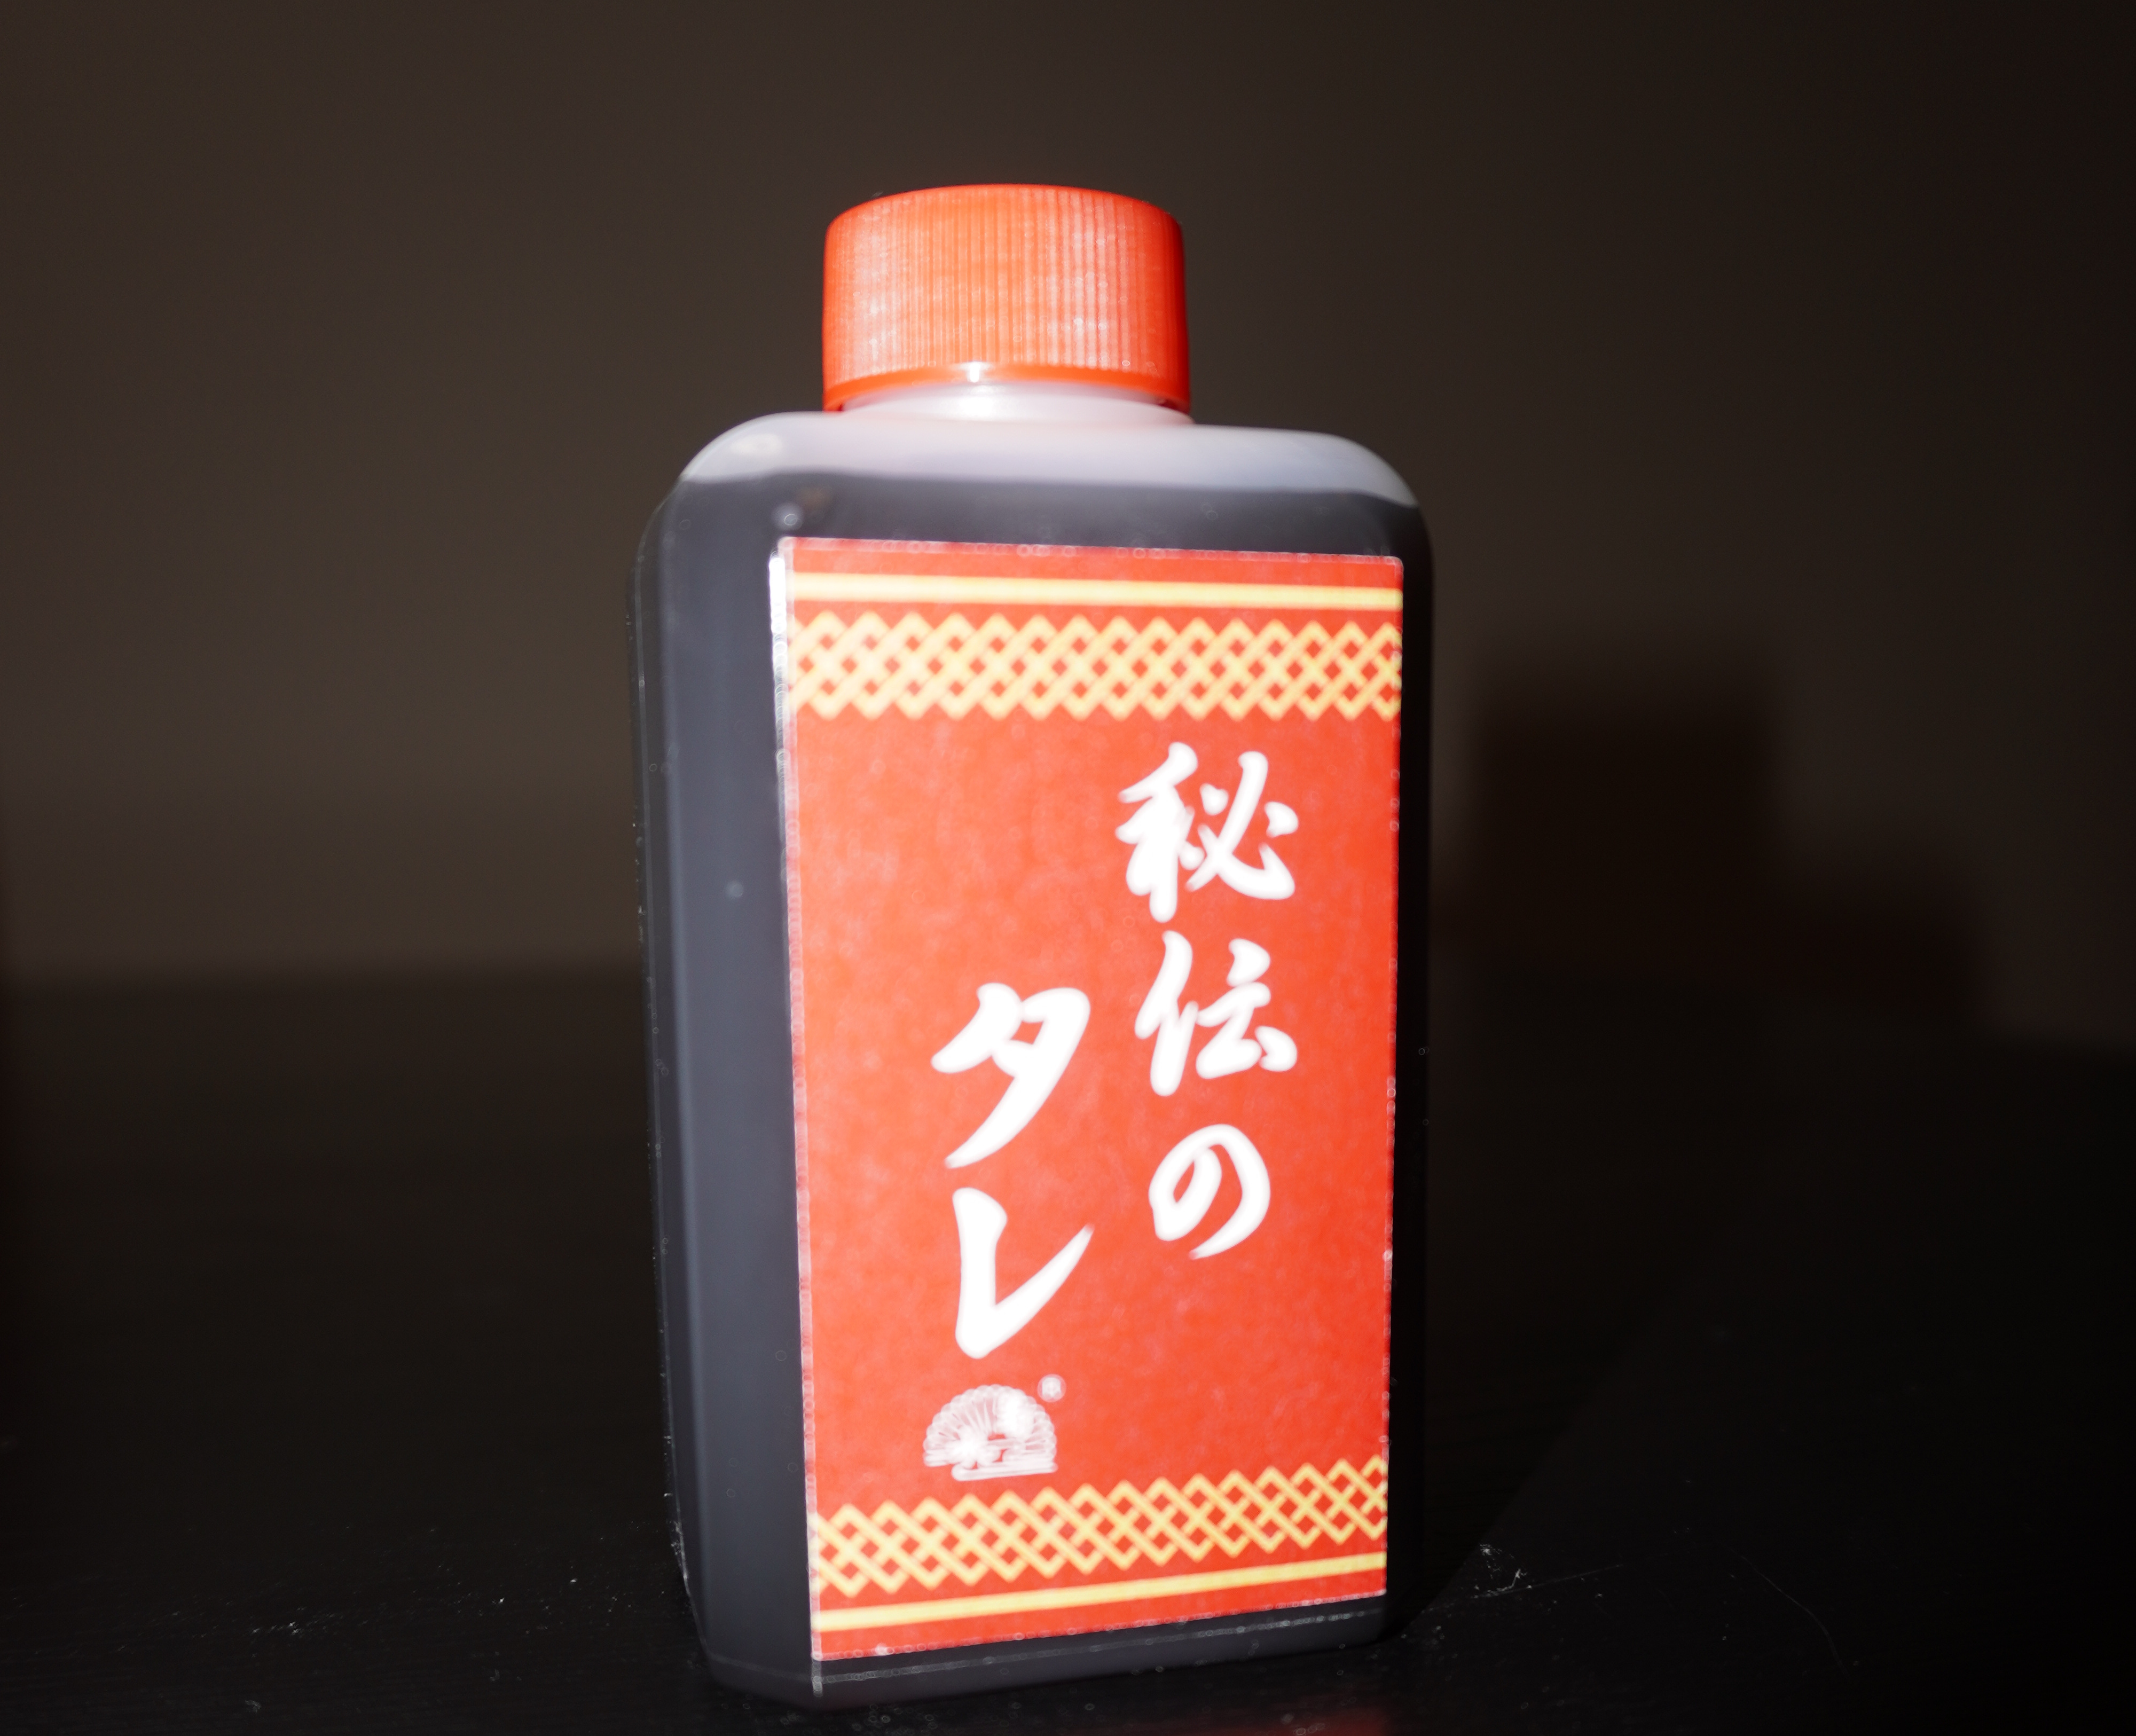 Kikusui's secret sauce